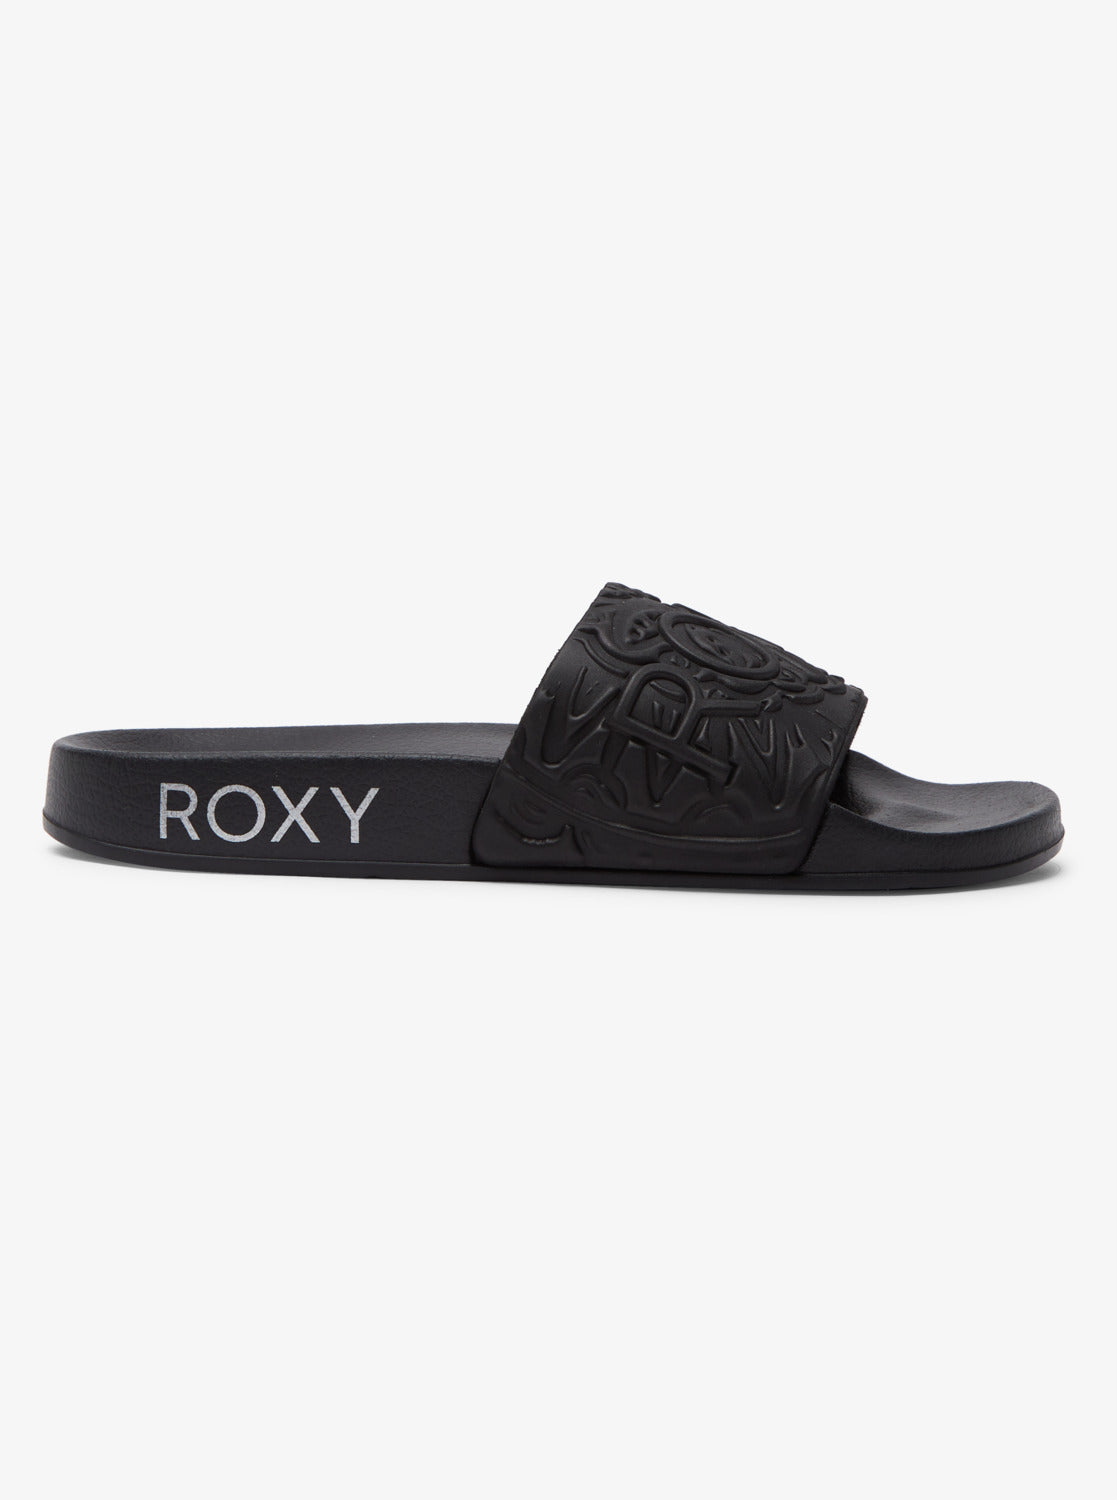 Roxy Slippy Mandala II Thong BLACK